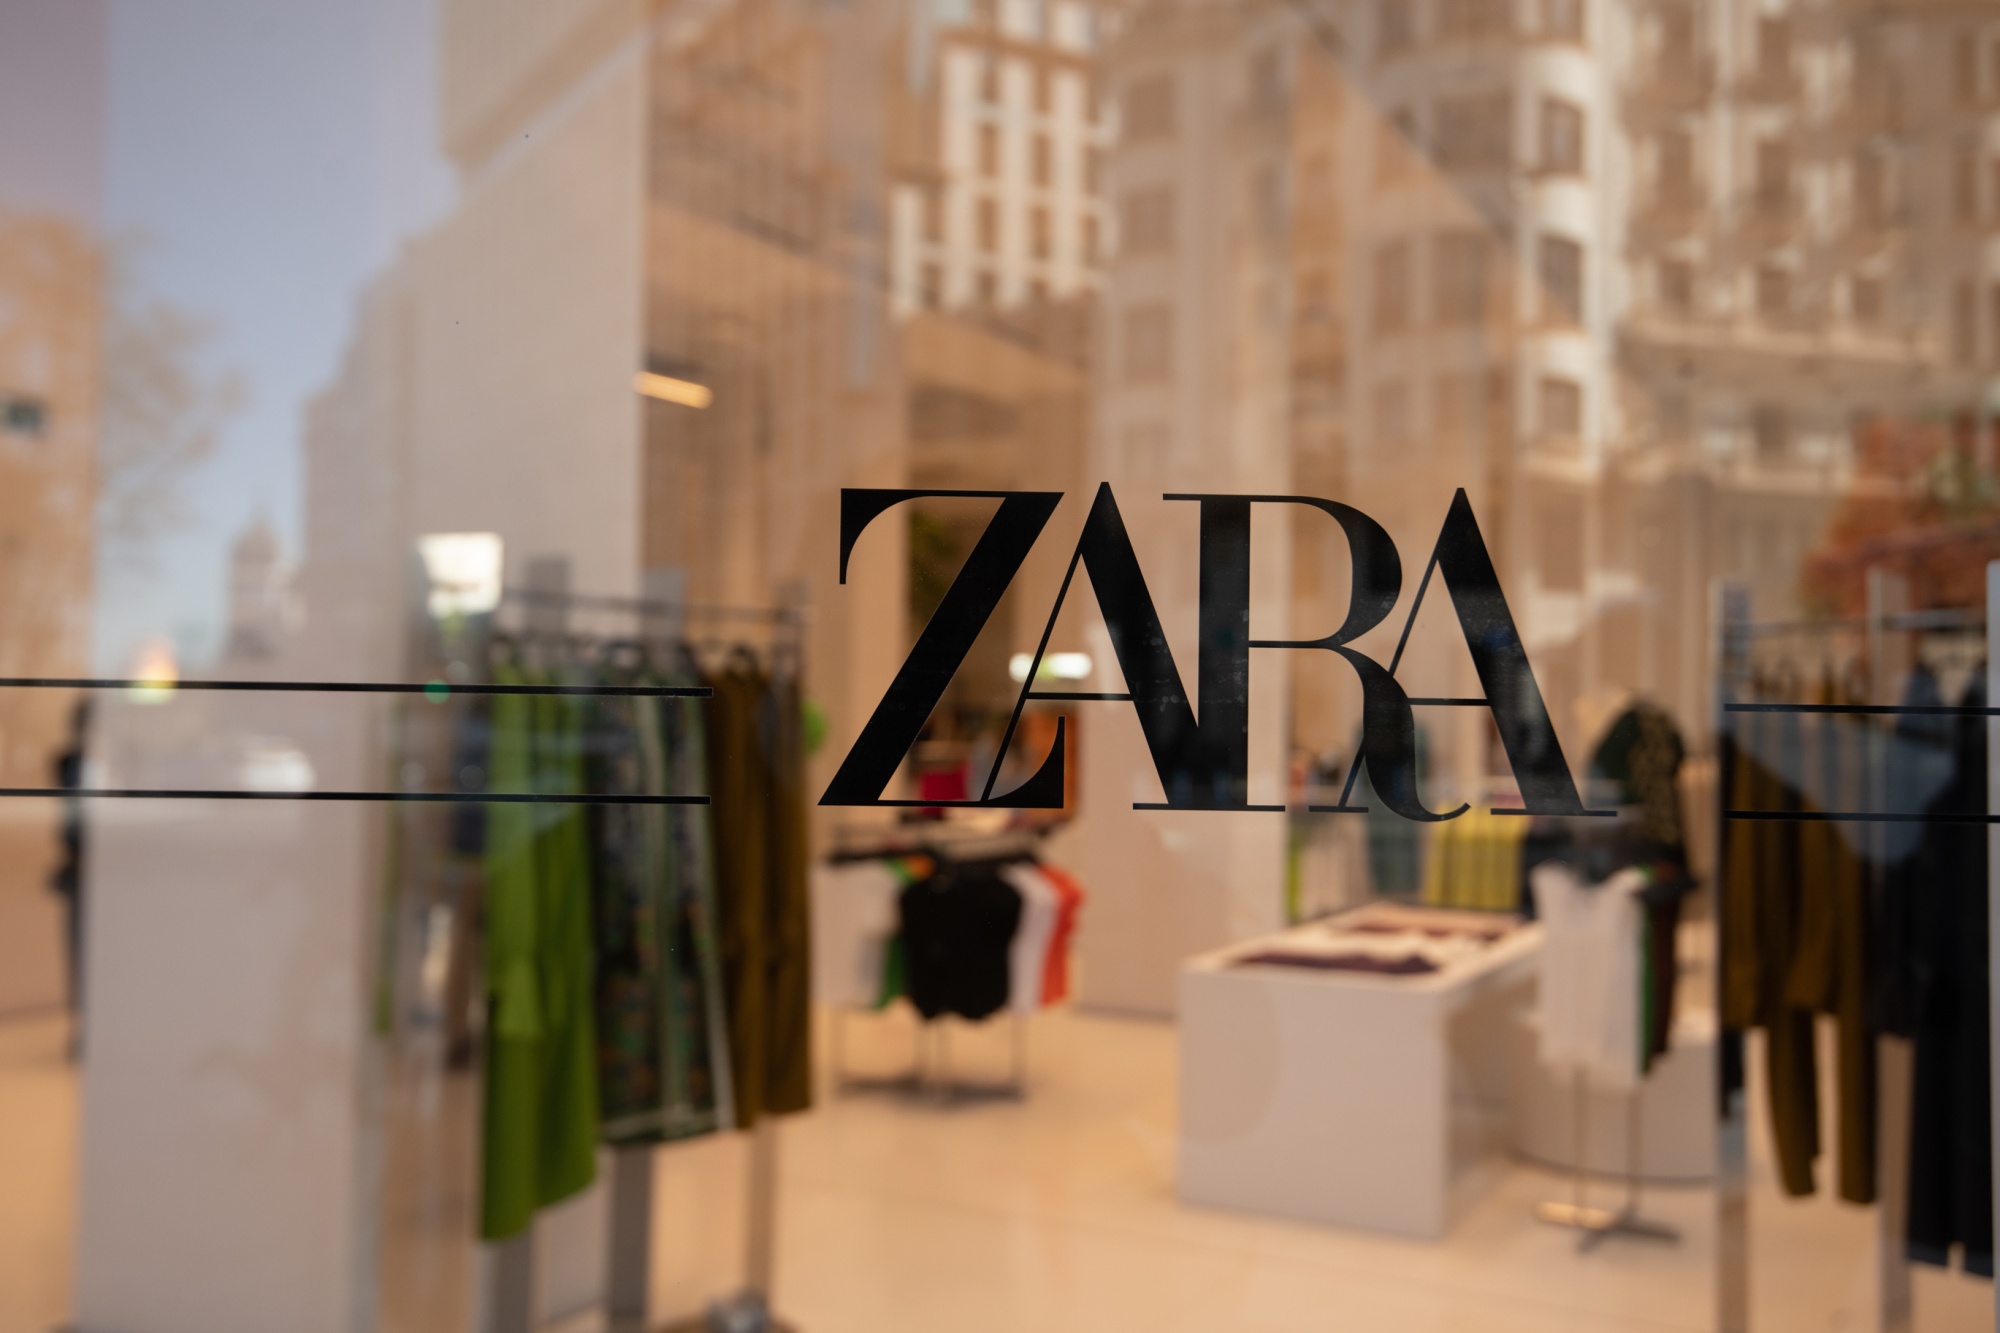 Zara owner Inditex profit jumps 40% as price rises slow